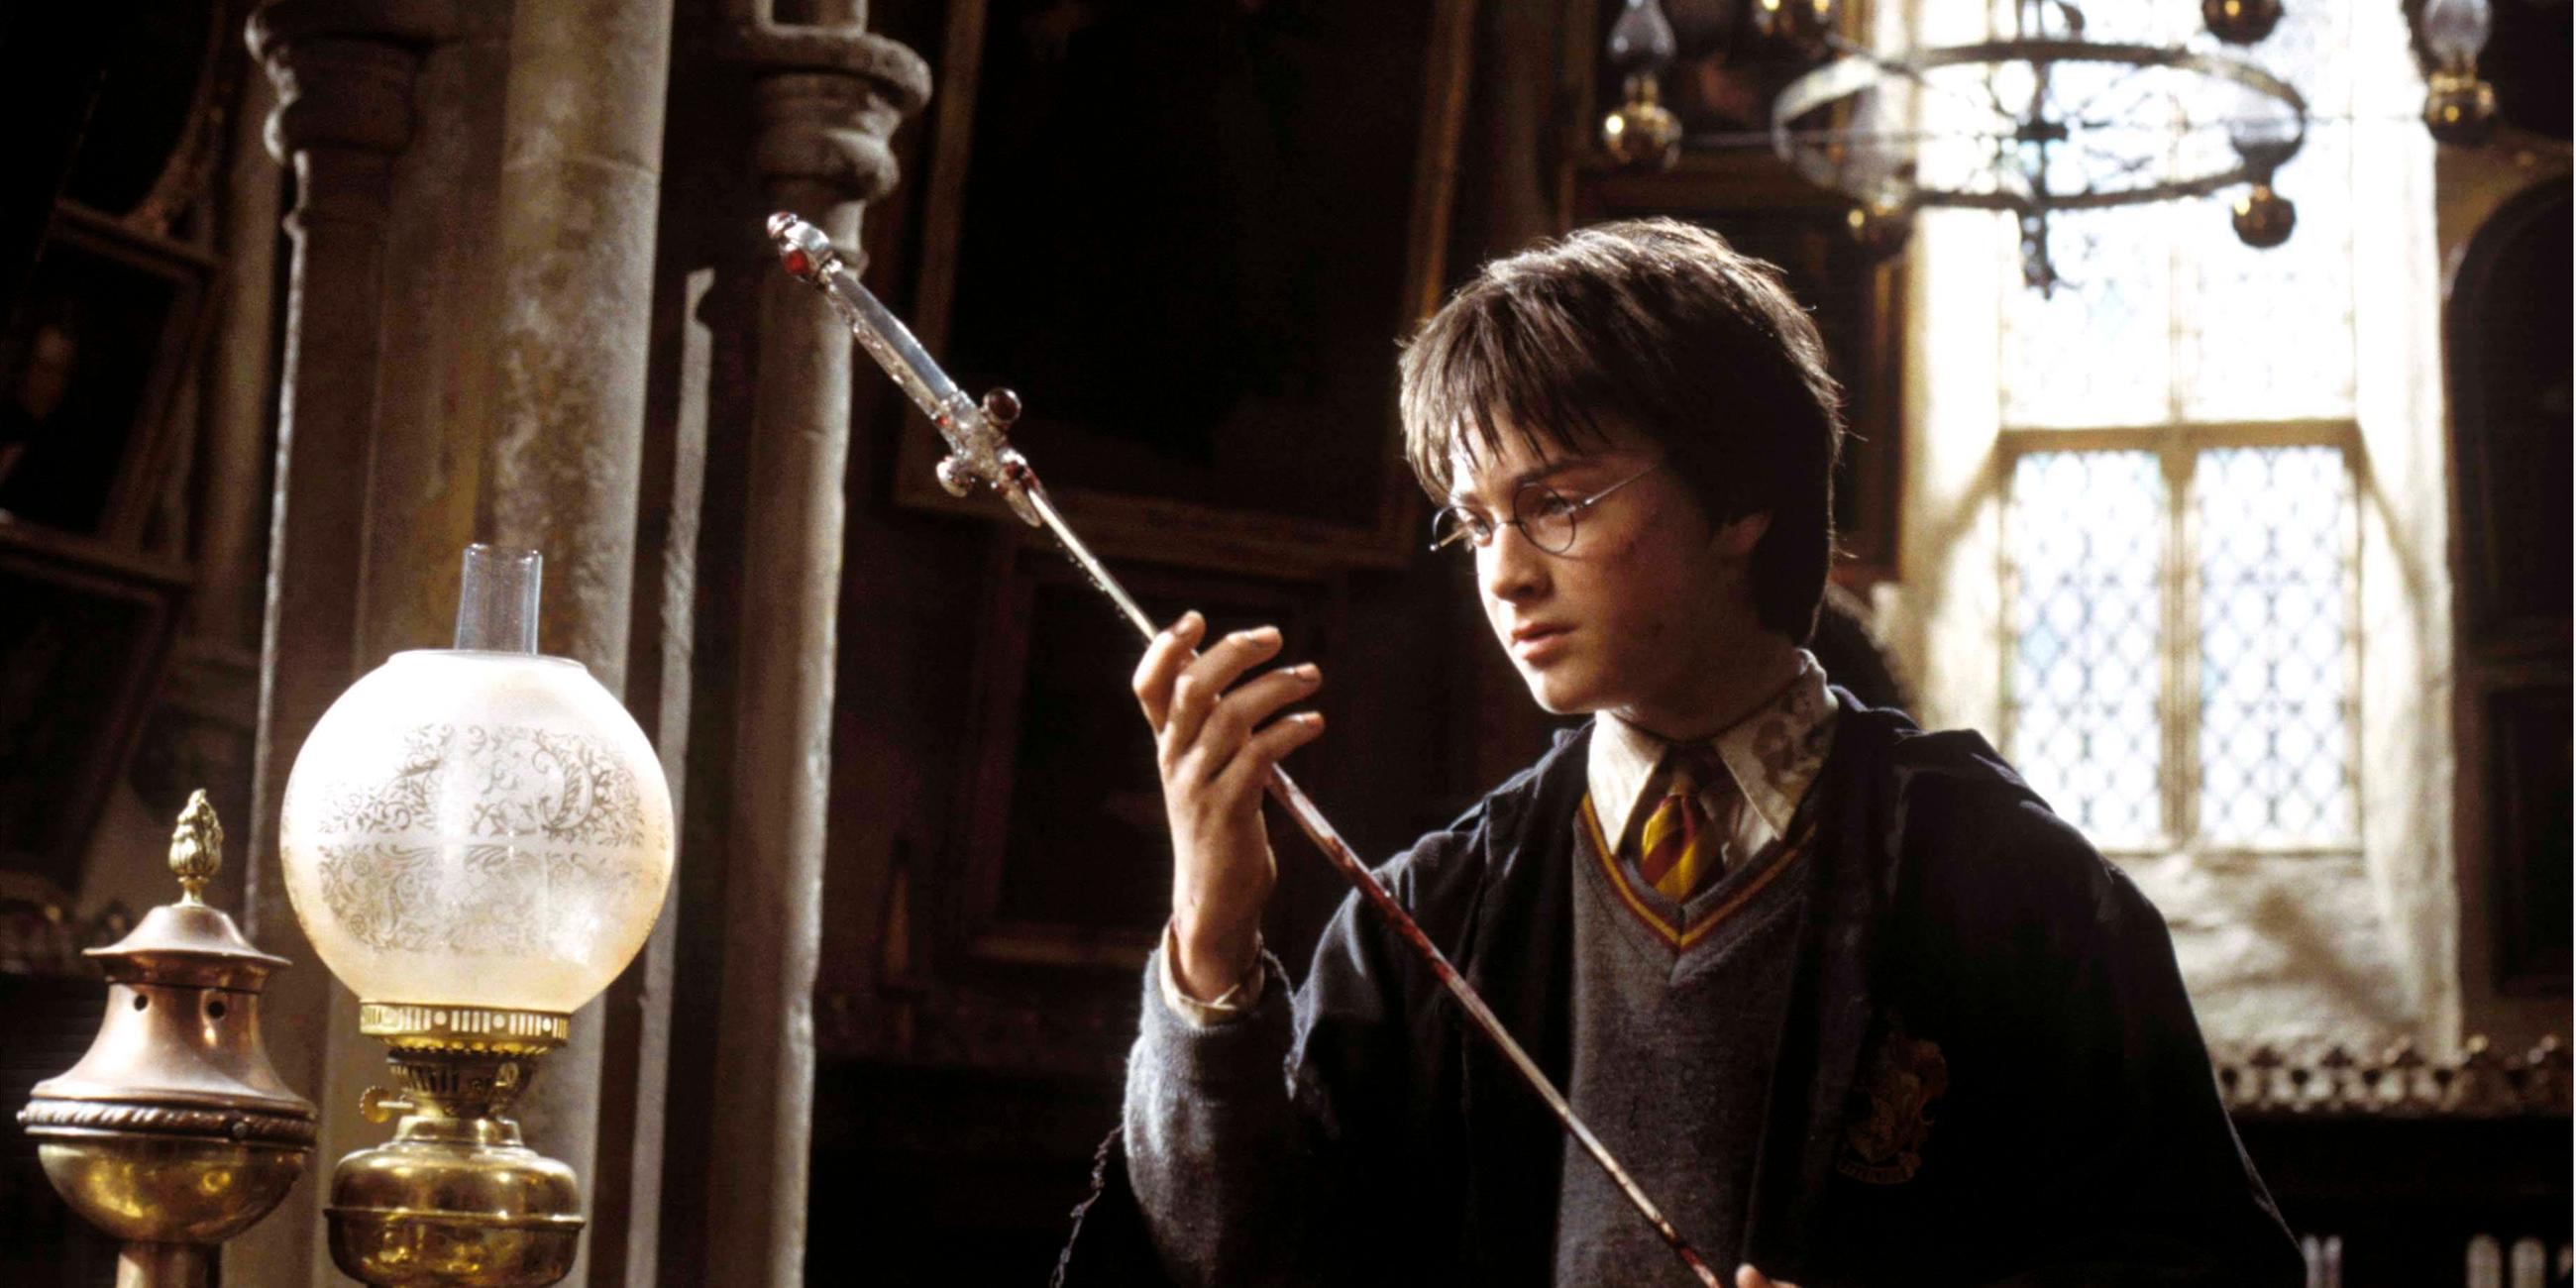 Daniel Radcliffe als Harry Potter in der Kino-Serie.